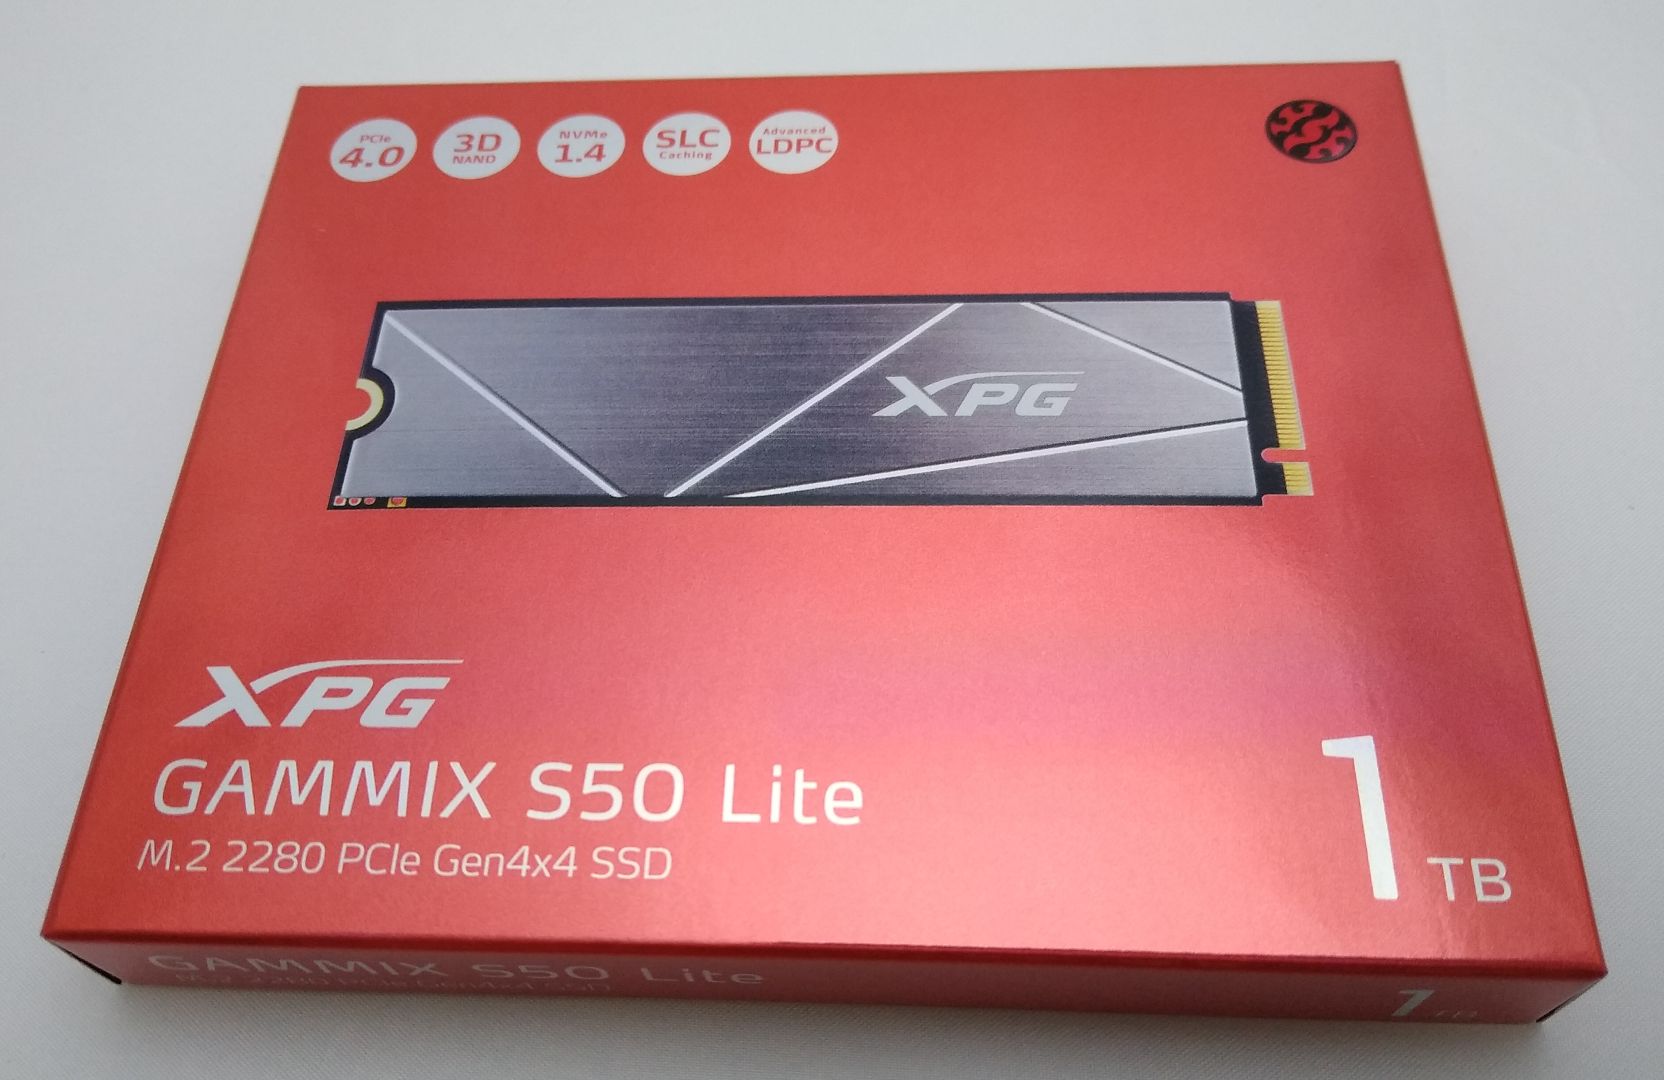 XPG Gammix S50 Lite PCIe Gen4x4 Review - Overclockers